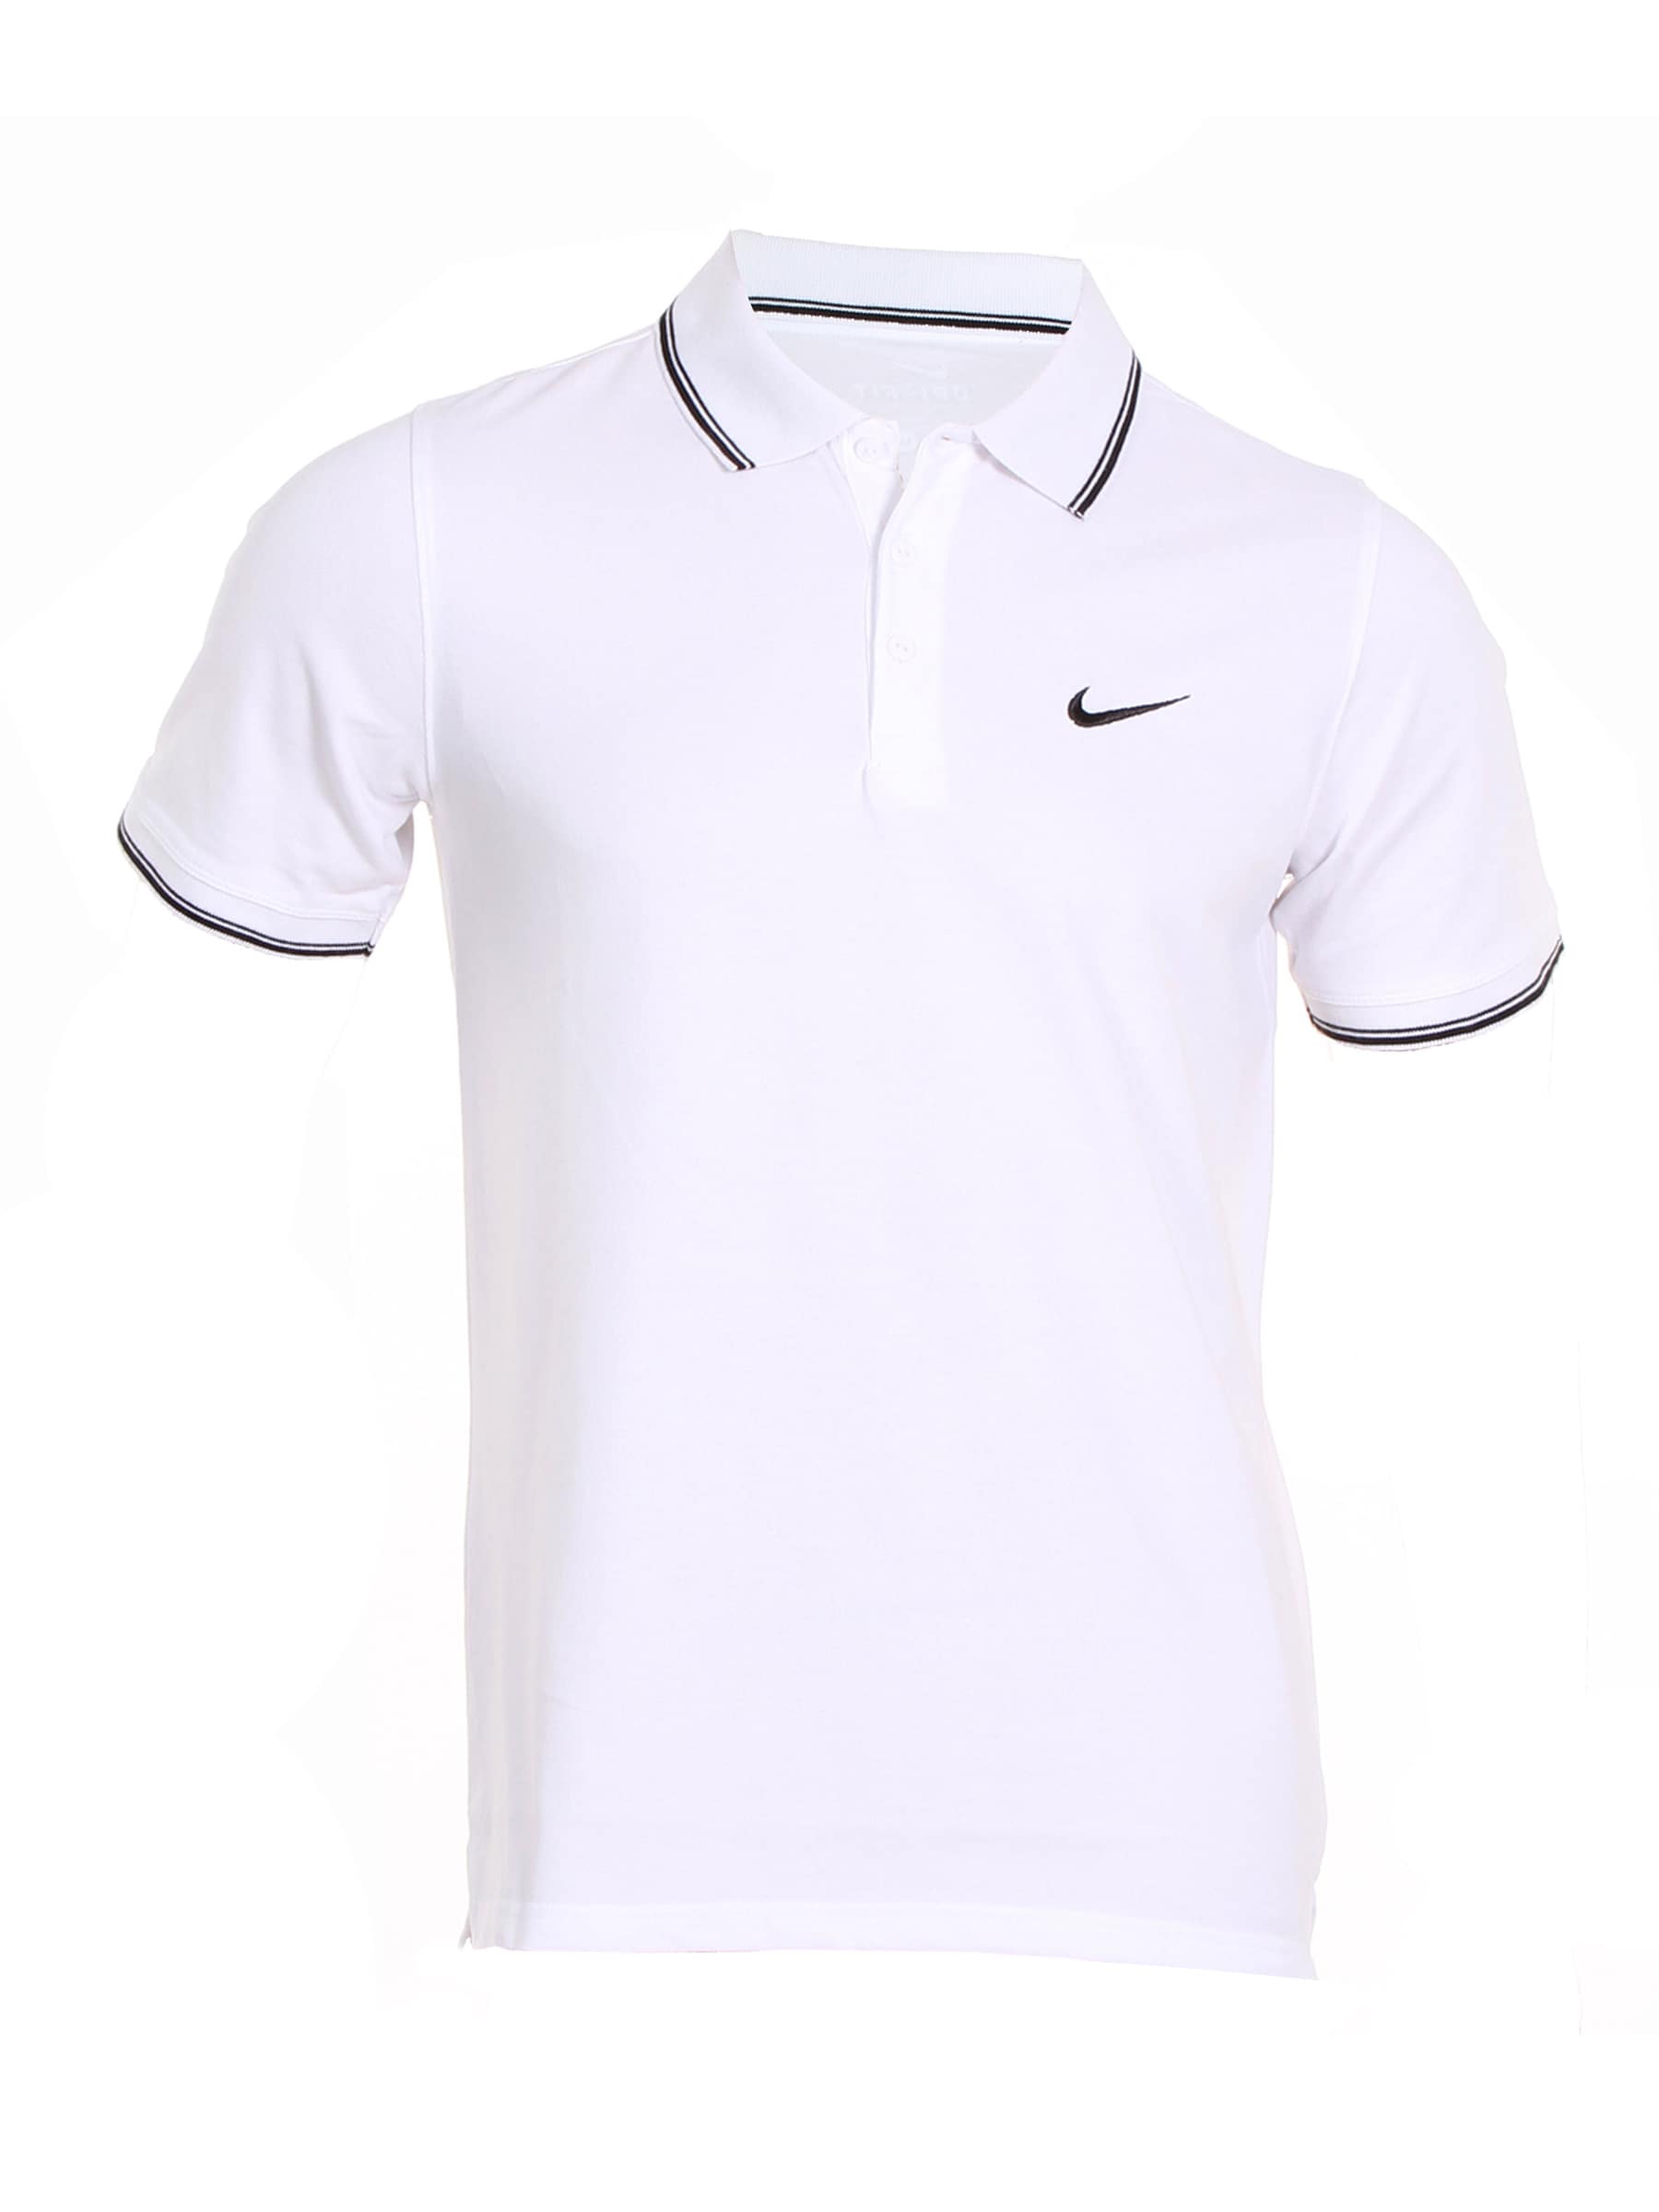 Nike Mens White Polo T-shirt